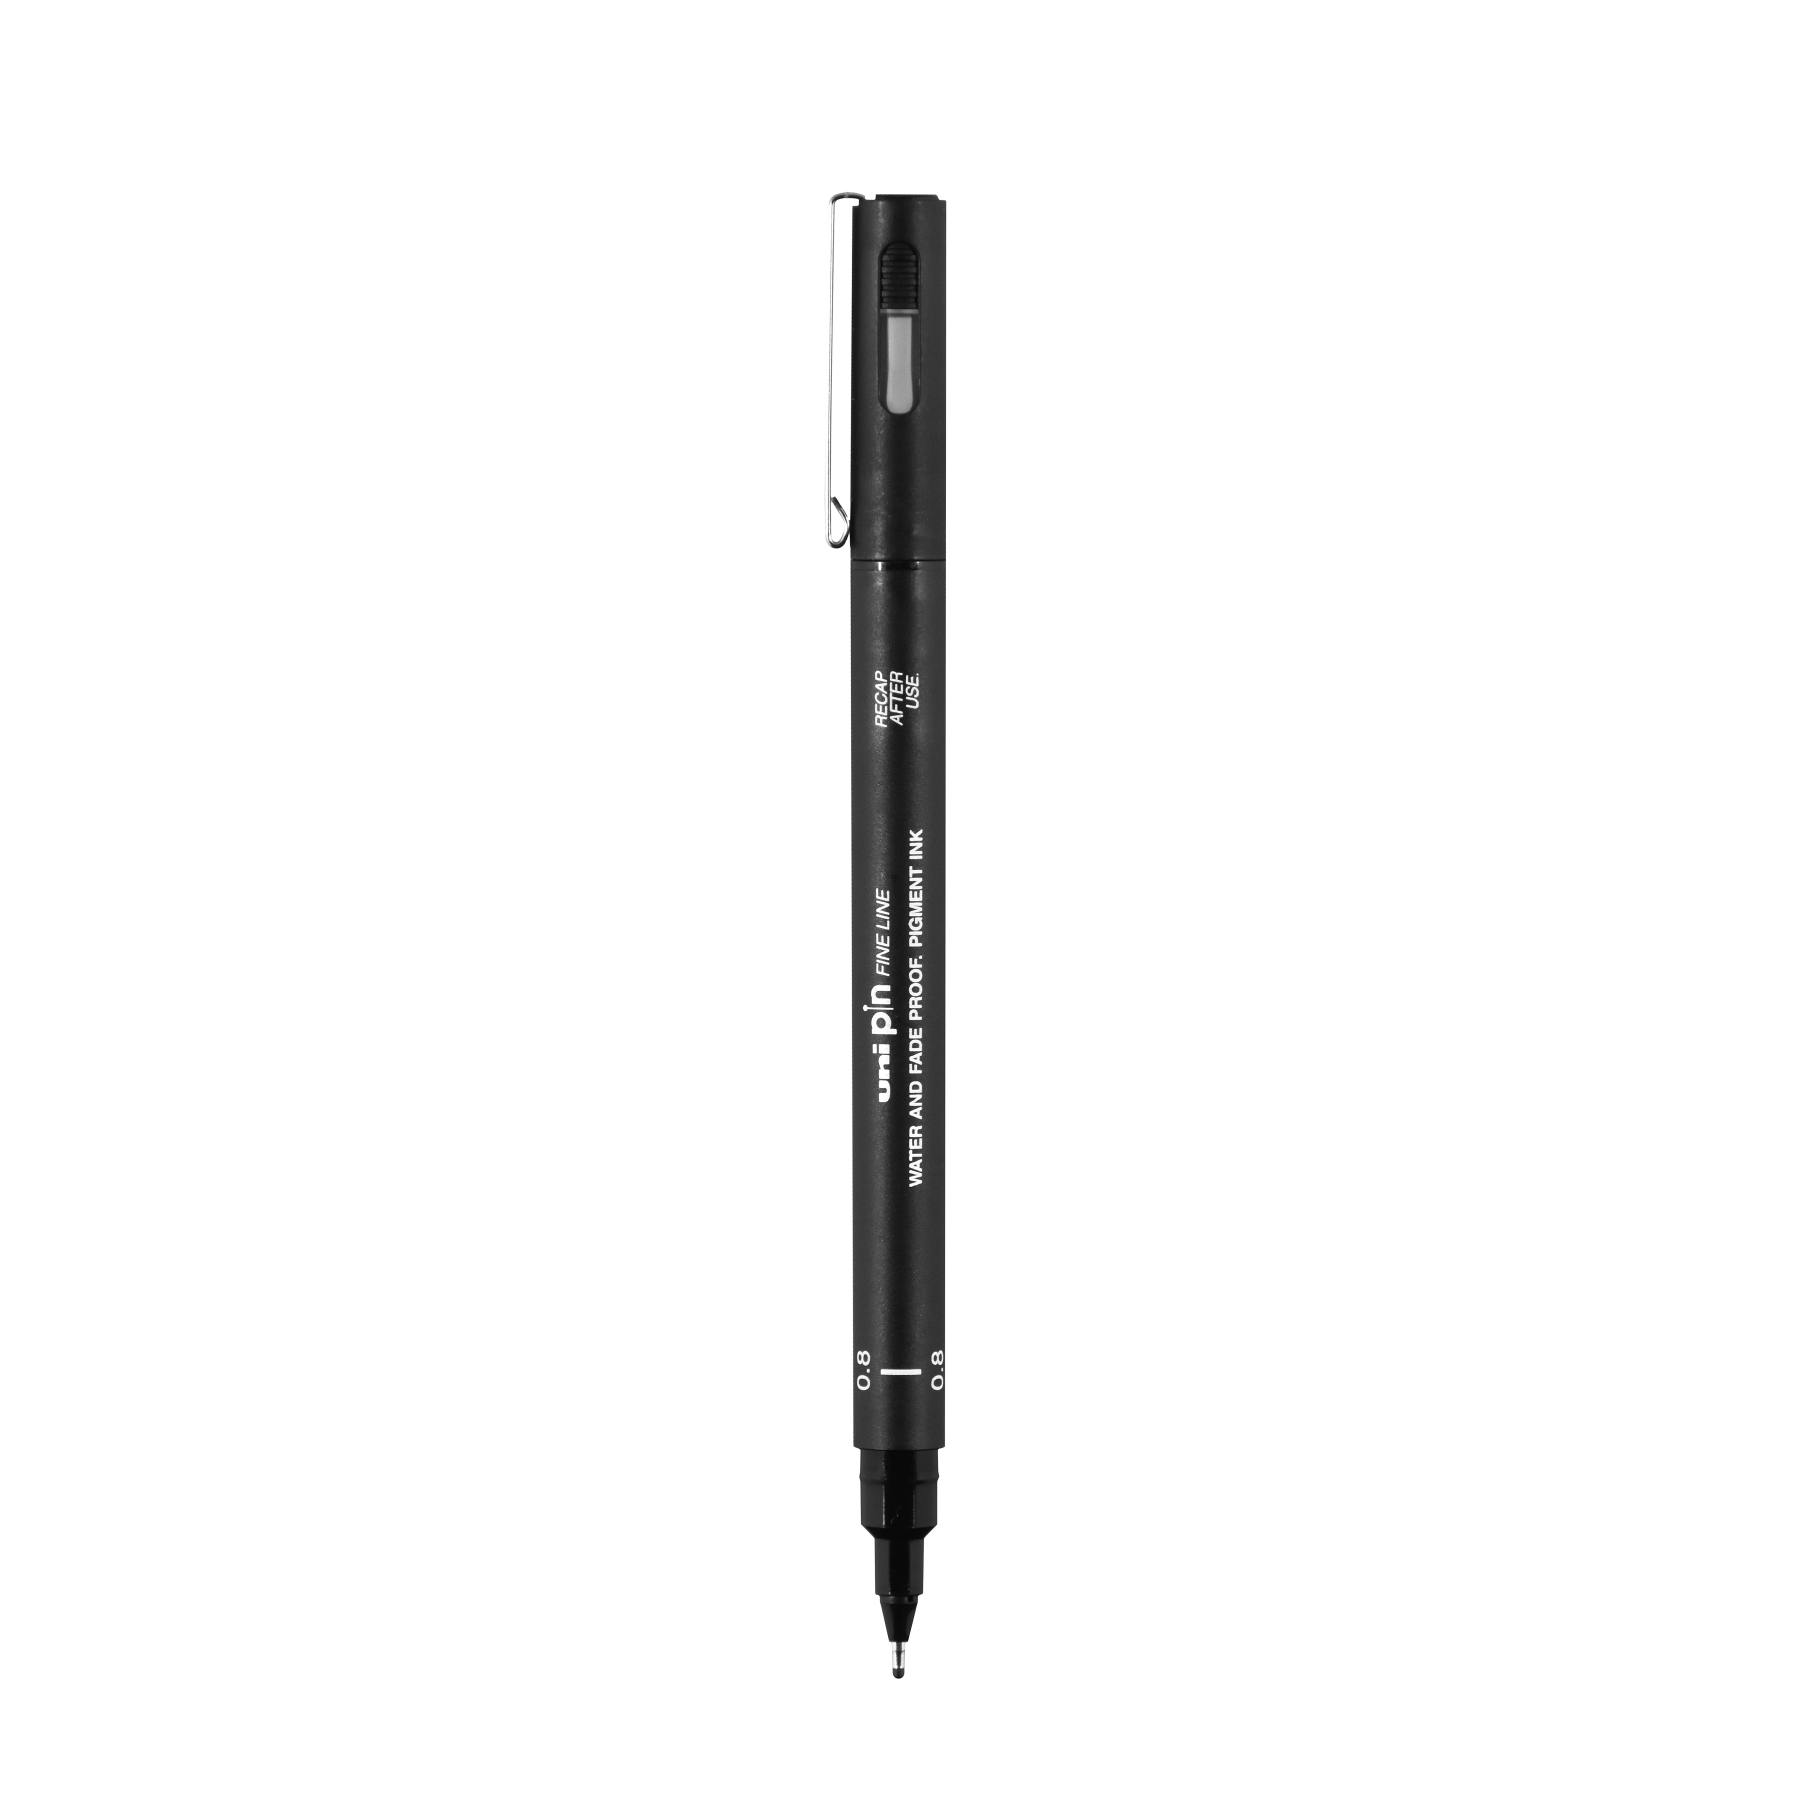 uni® Pin, Fine Line Drawing Pen (0.8mm)